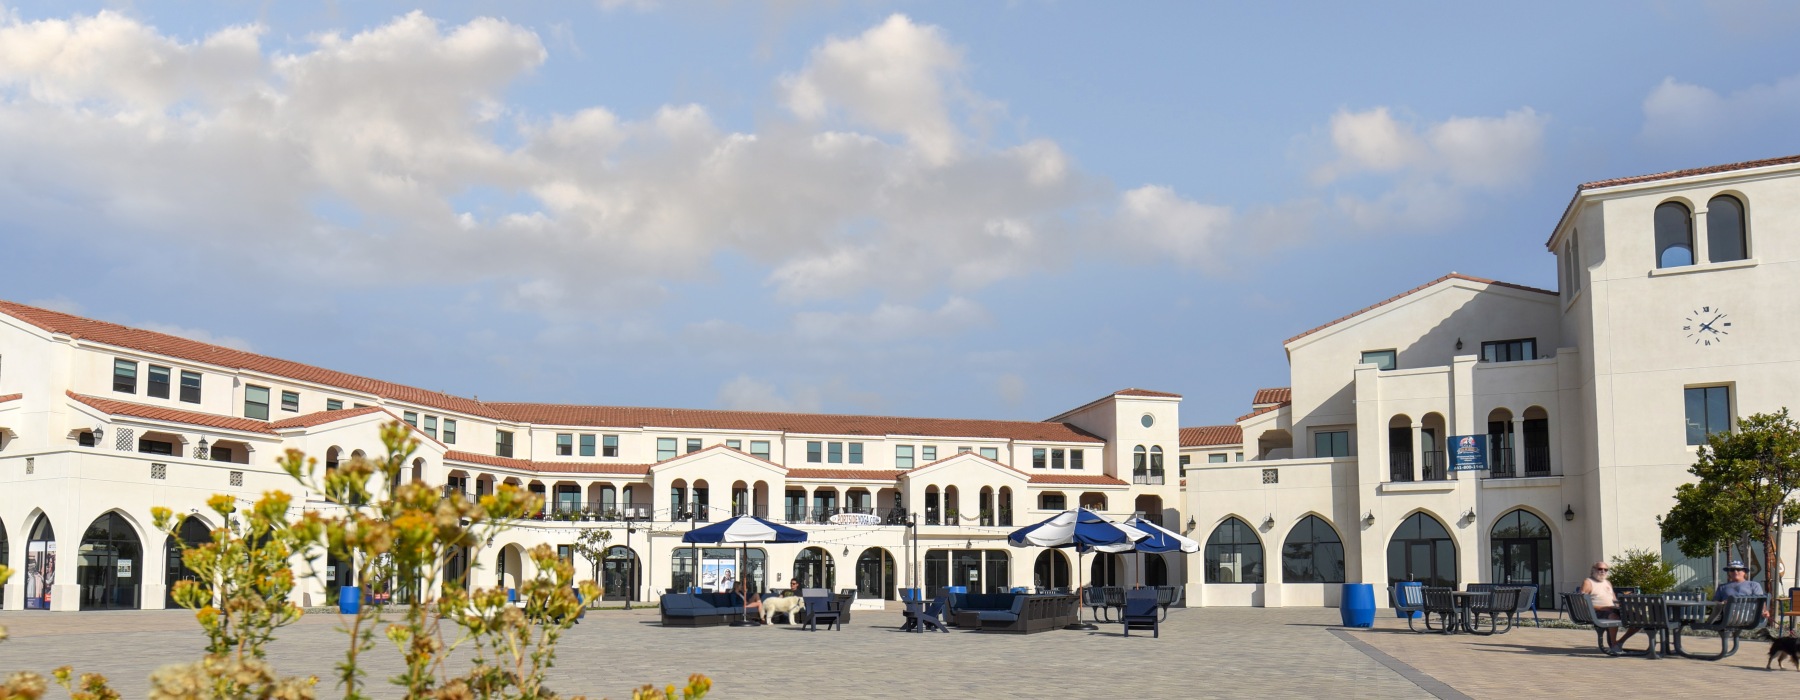 Portside Plaza